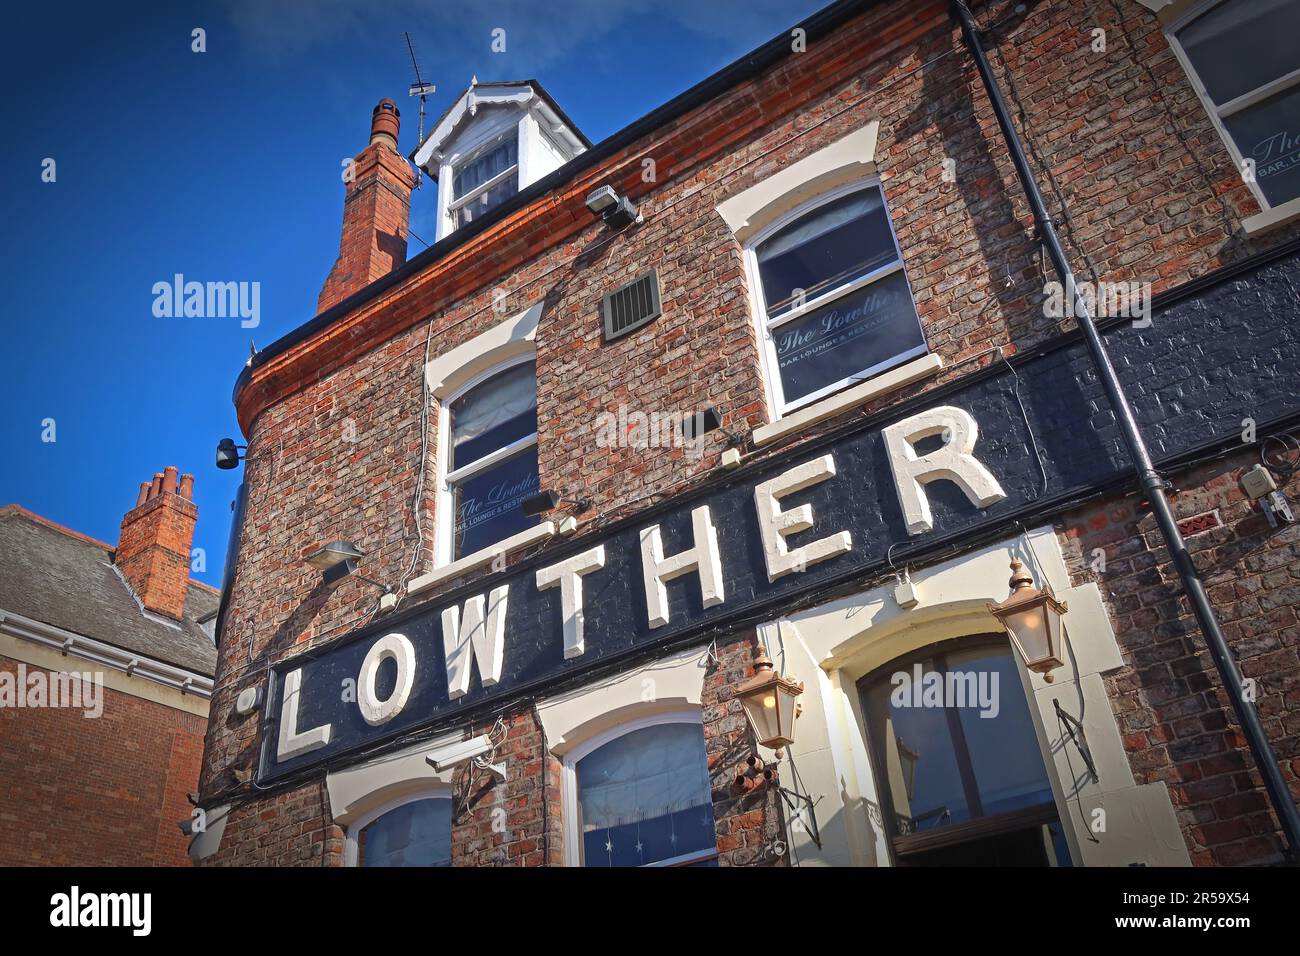 Lowthers riverside pub, river Ouse, York city centre, 8 Cumberland Street, York, England, UK,  YO1 9SW Stock Photo